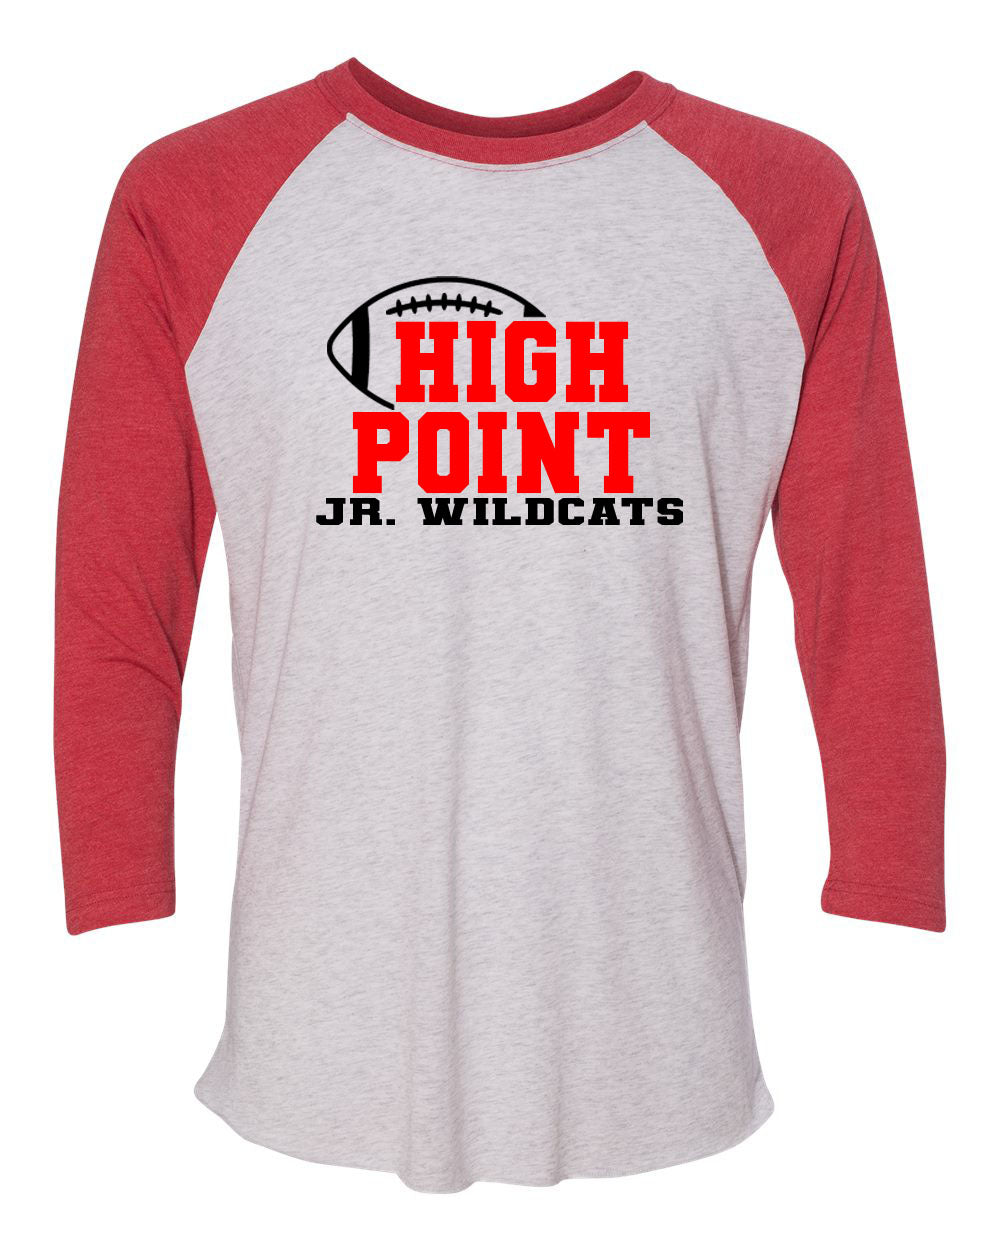 High Point Football design 2 raglan shirt